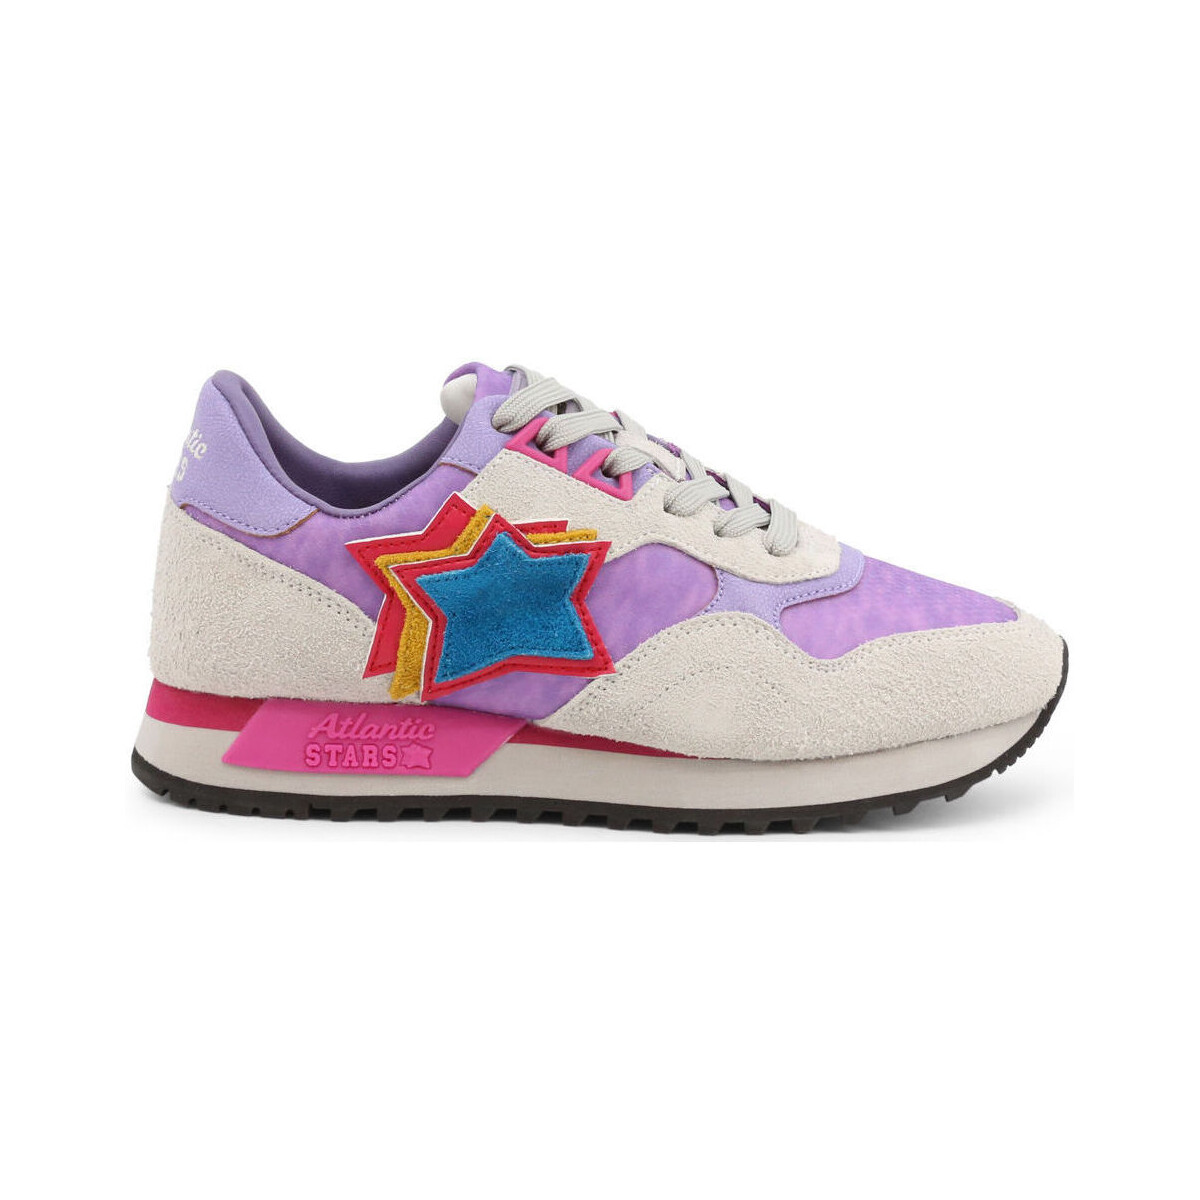 Schoenen Dames Sneakers Atlantic Stars ghalac-ylbl-dr23 violet Violet